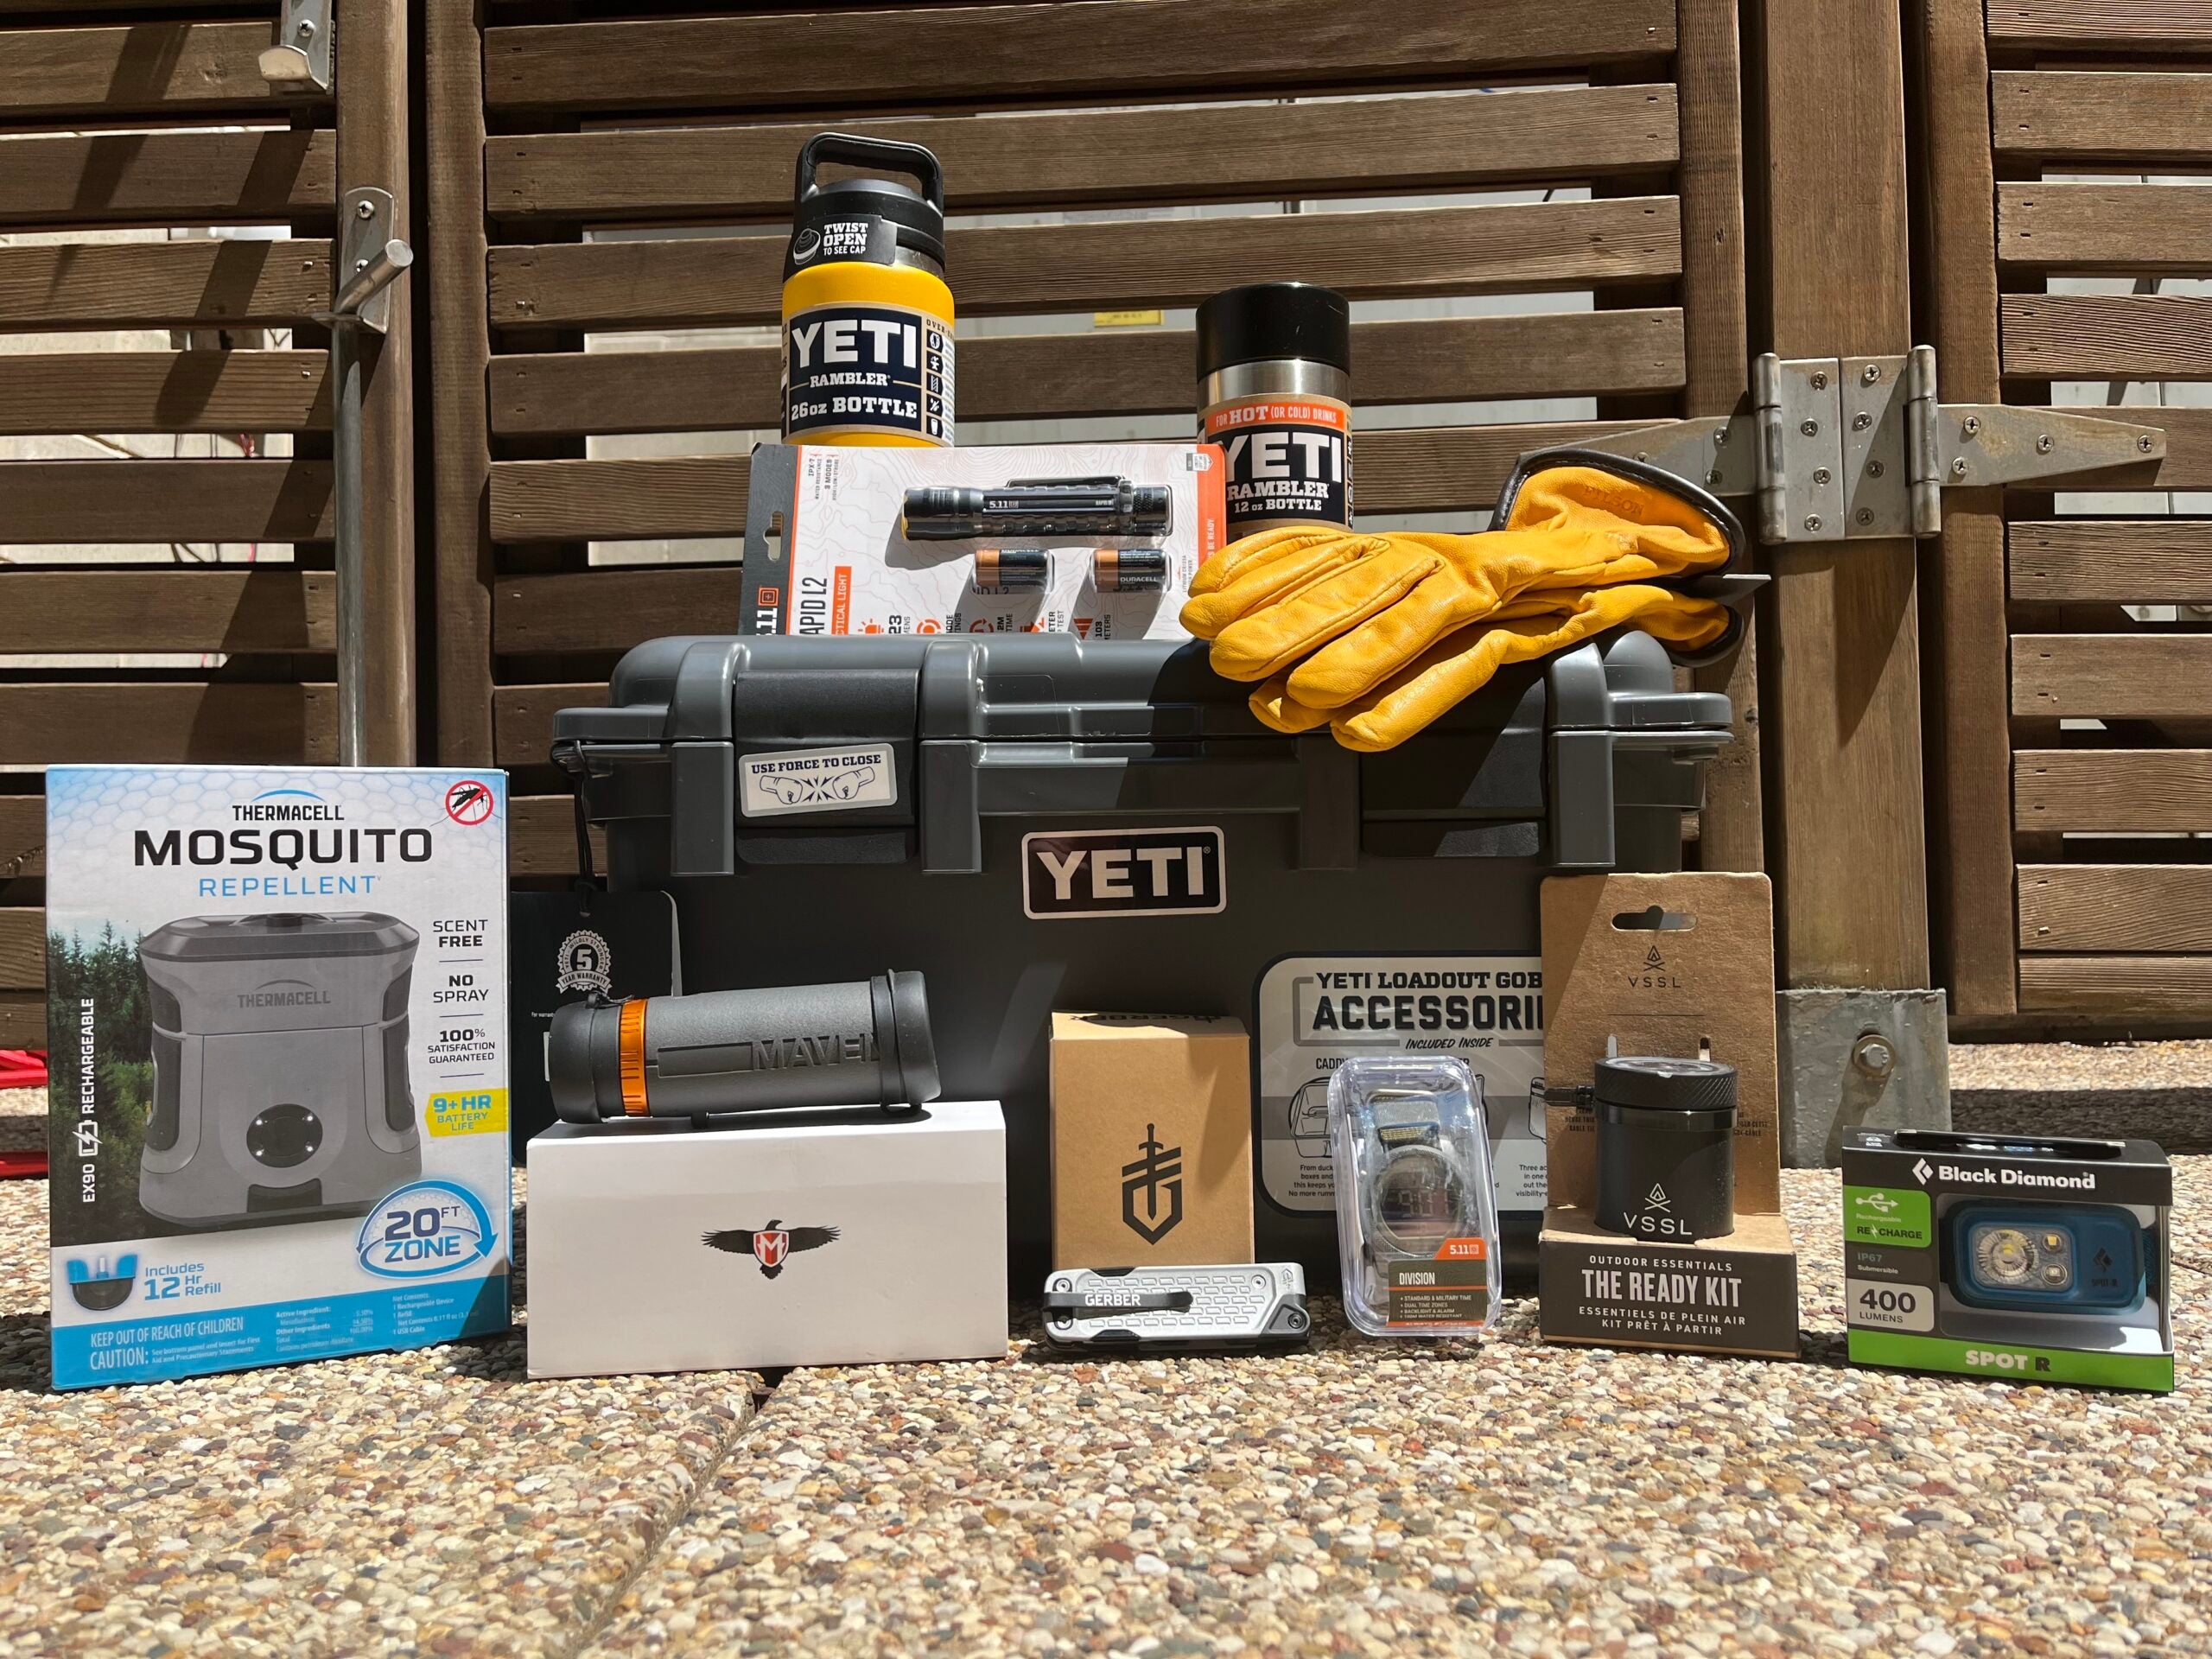 Win a Yeti LoadOut Box Full of Outdoor Gear!